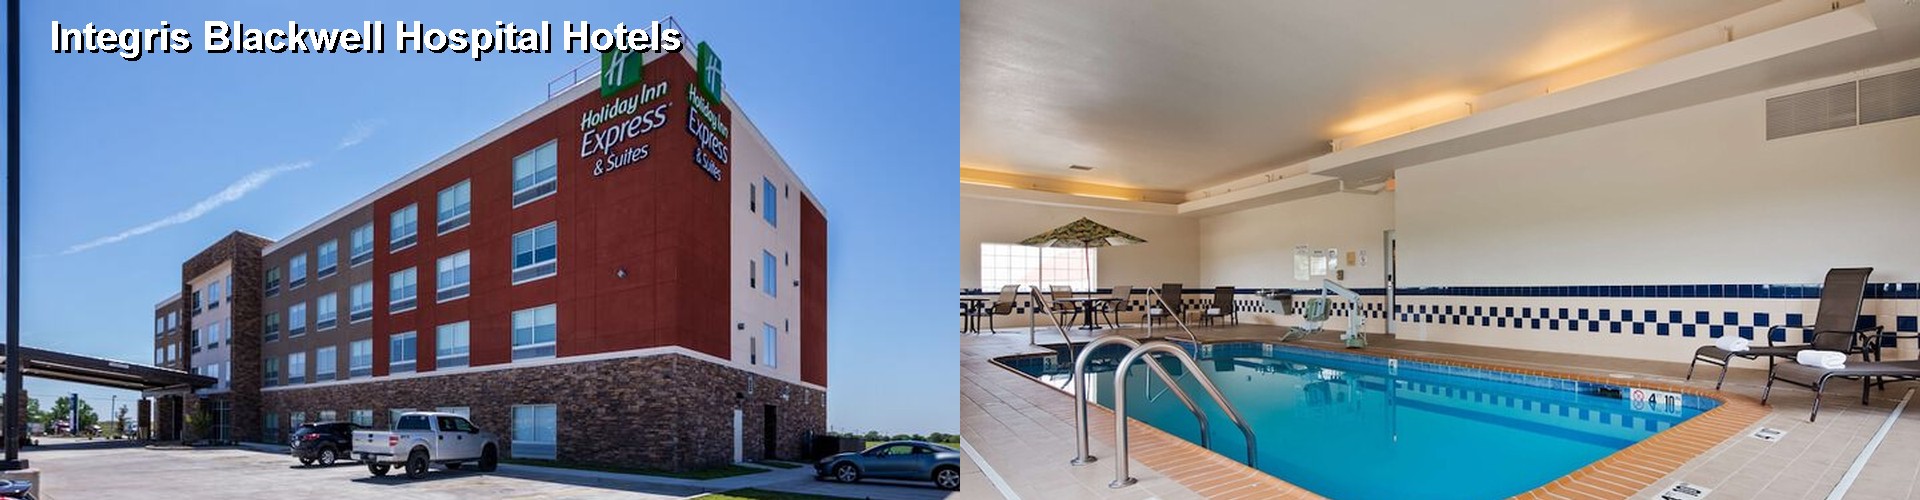 5 Best Hotels near Integris Blackwell Hospital